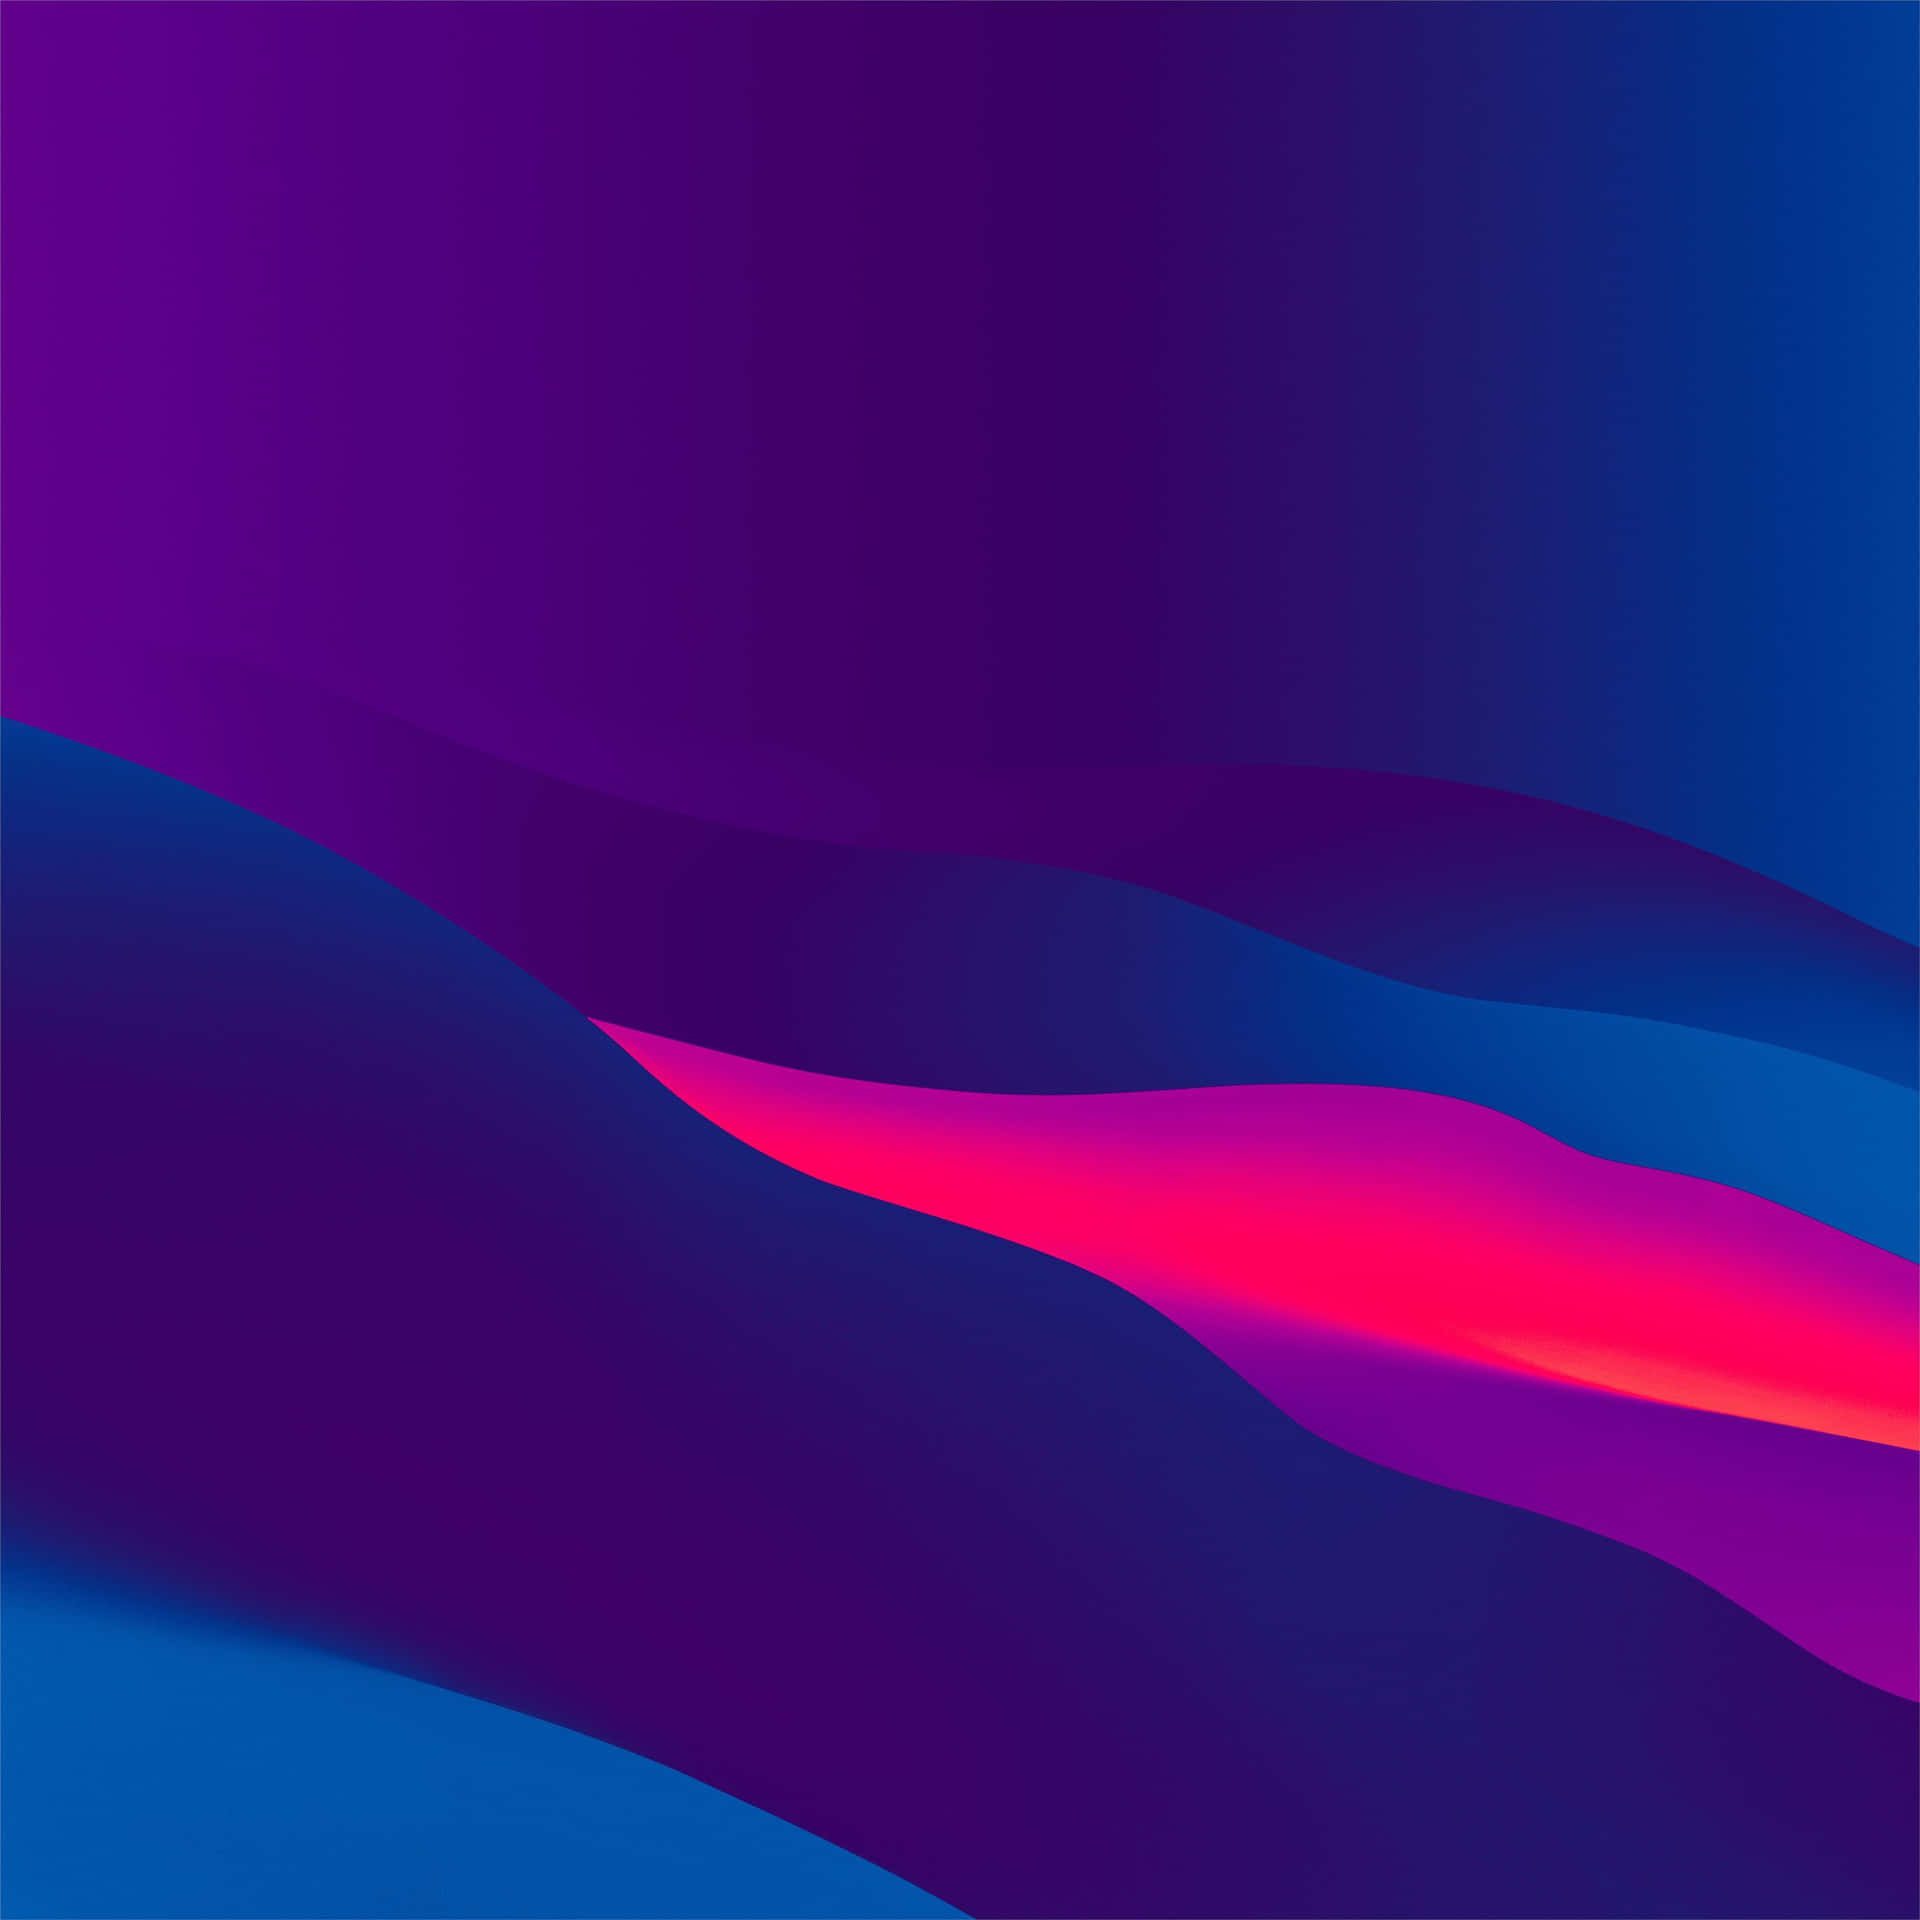 Enjoy the sleek and minimalist design of the Blue iPad Wallpaper